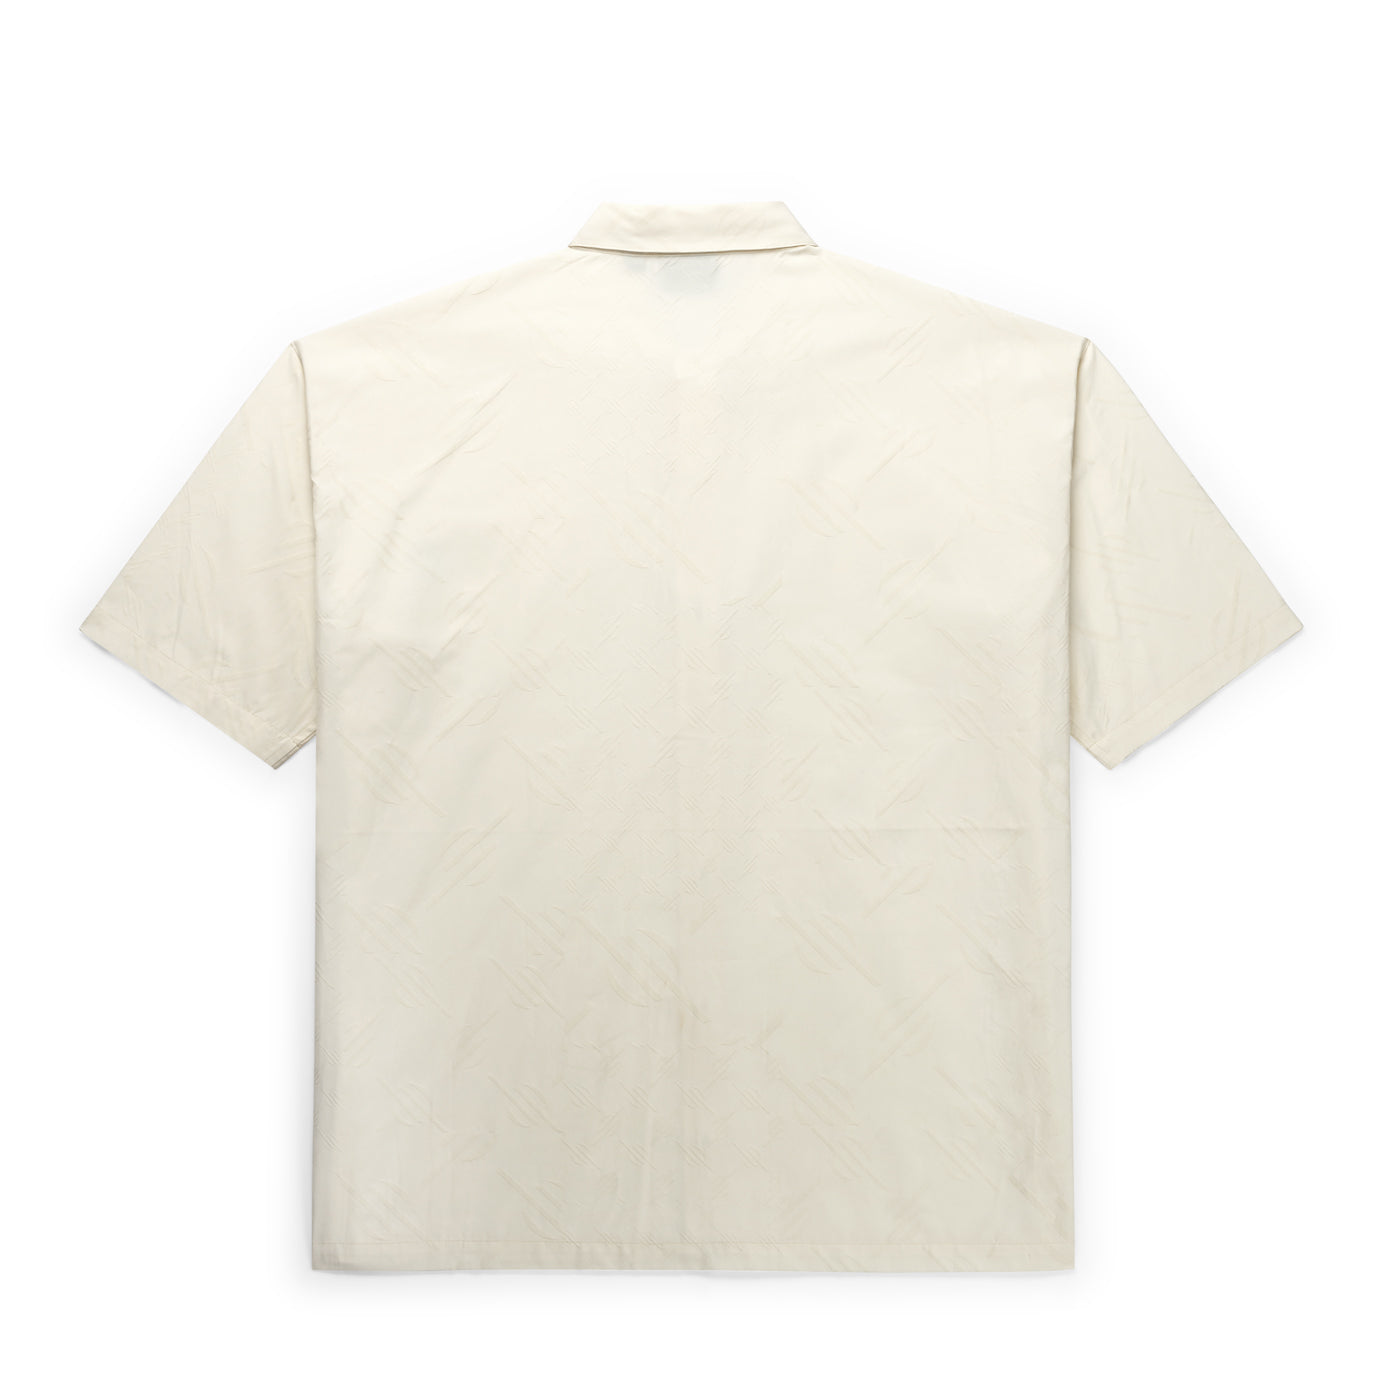 Piam Short Sleeve Shirt - Egret White